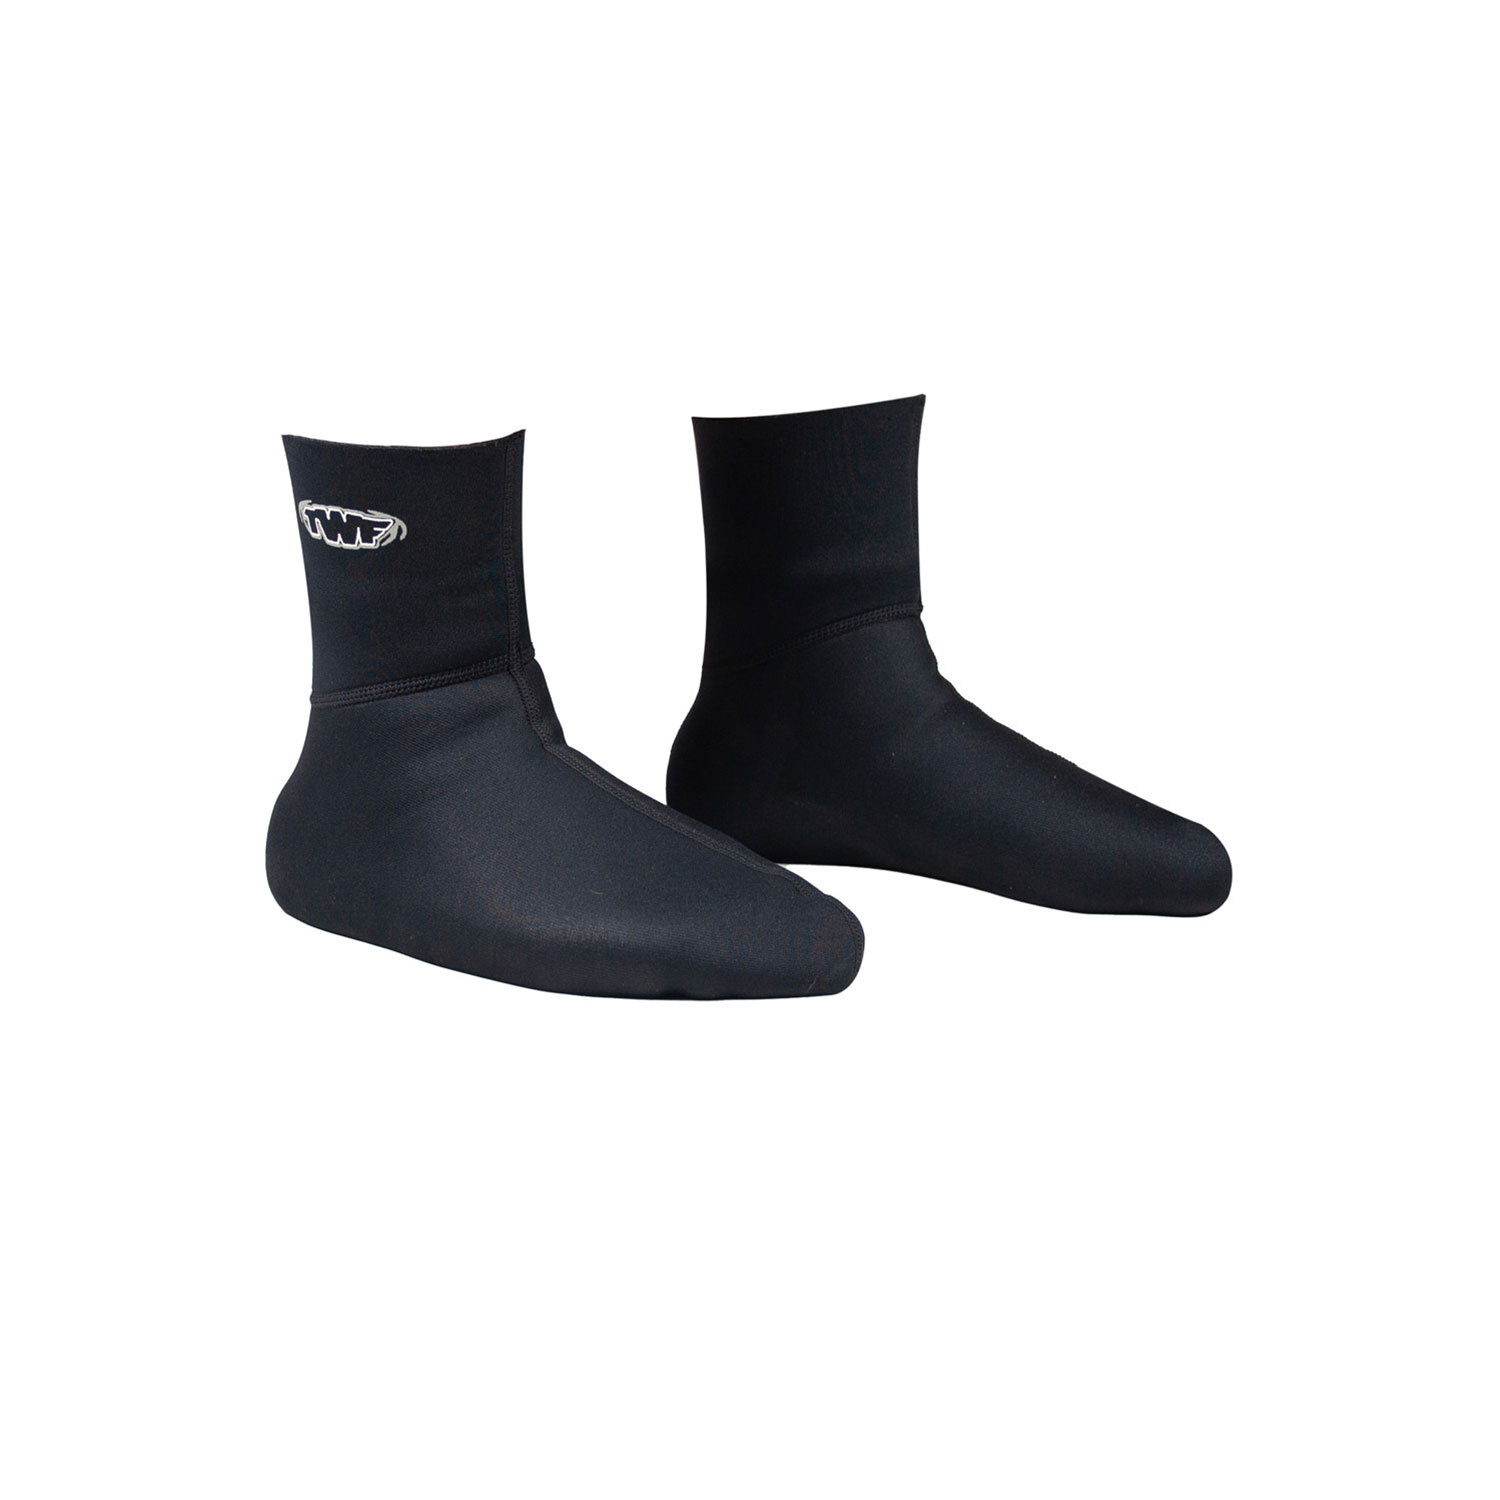 TWF Neoprene Socks - Black / 3-4 Image 2